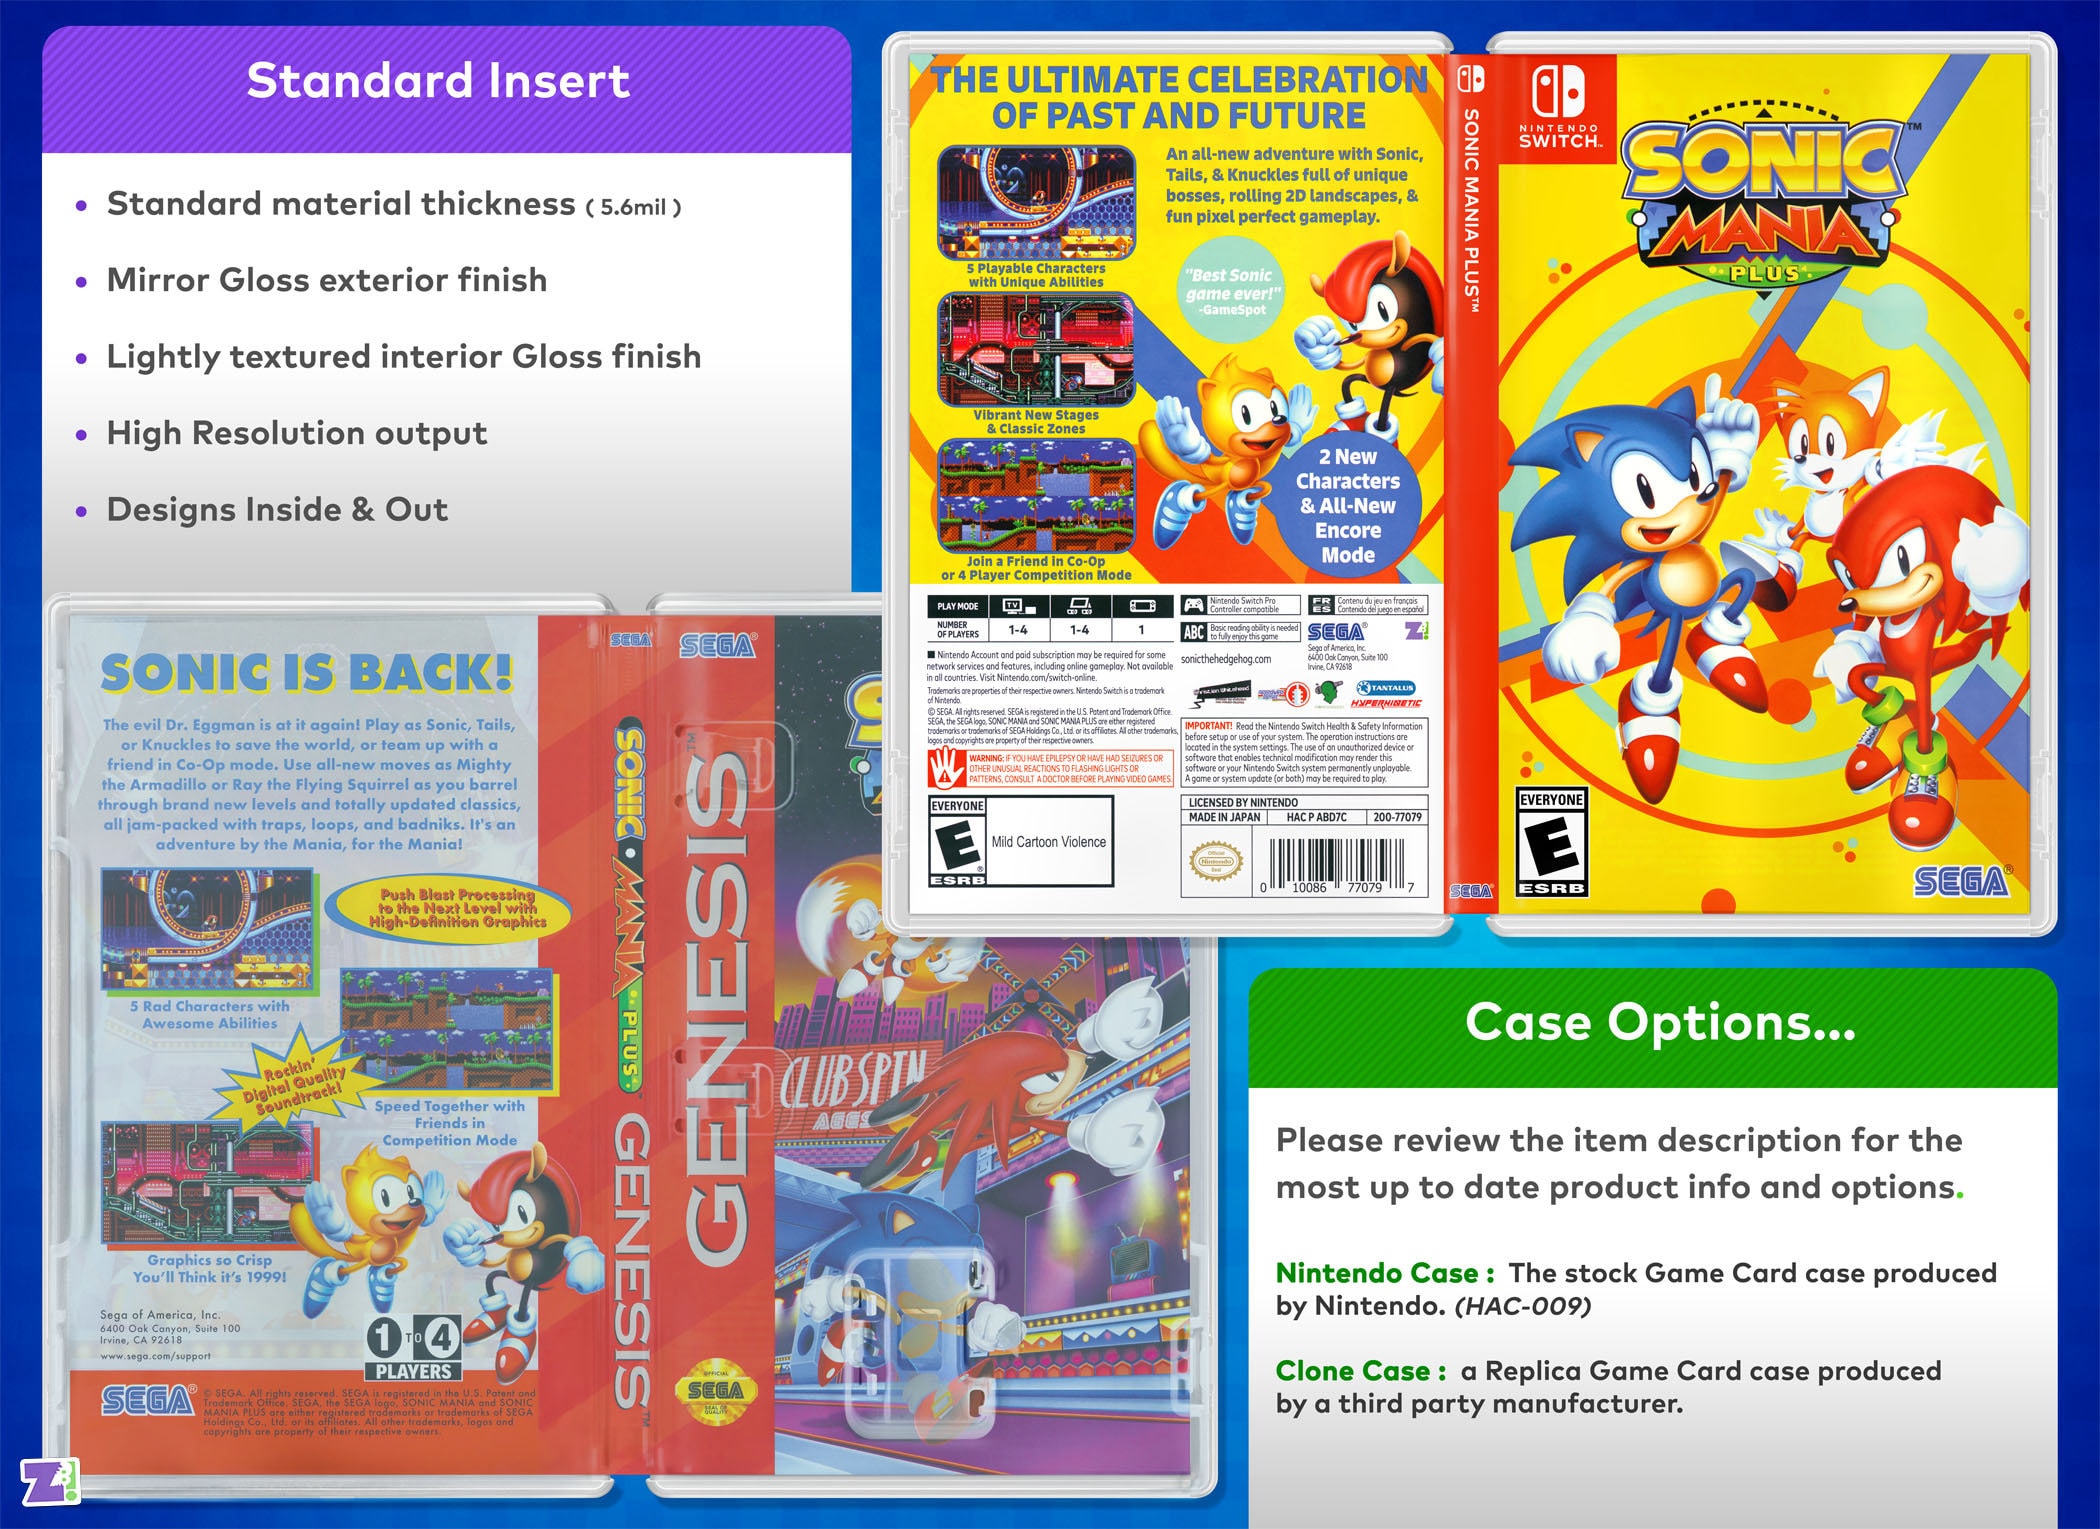 Sonic Mania Plus (Nintendo Switch) : : PC & Video Games